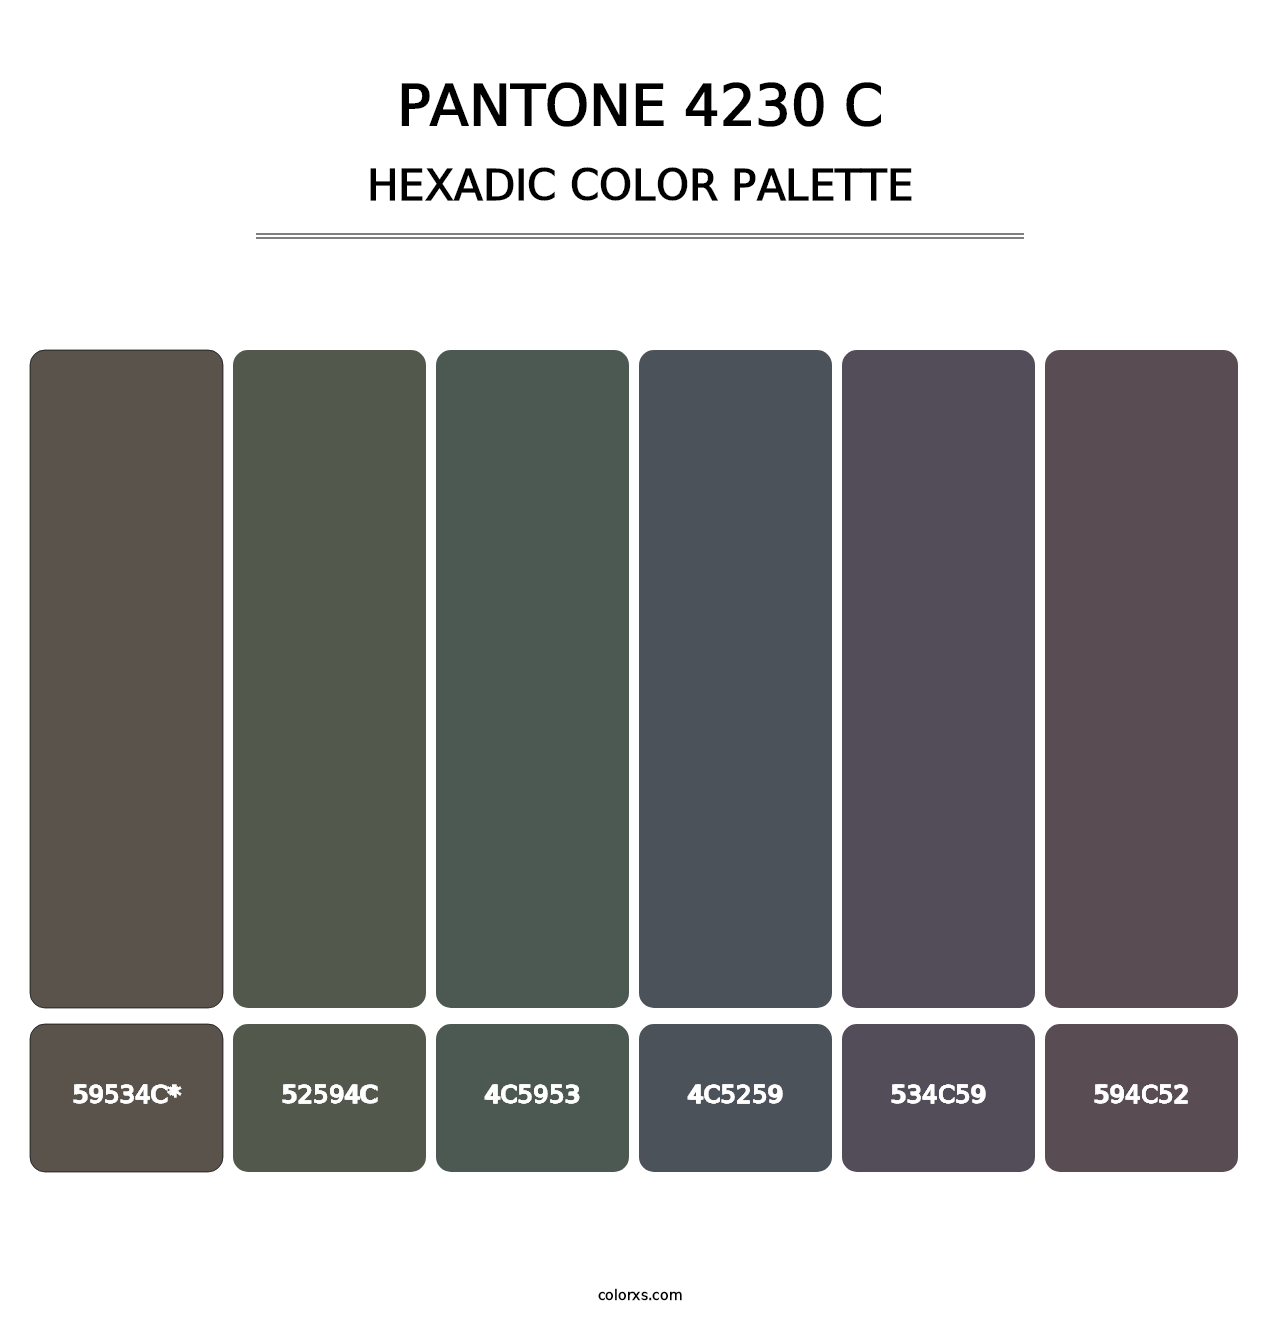 PANTONE 4230 C - Hexadic Color Palette